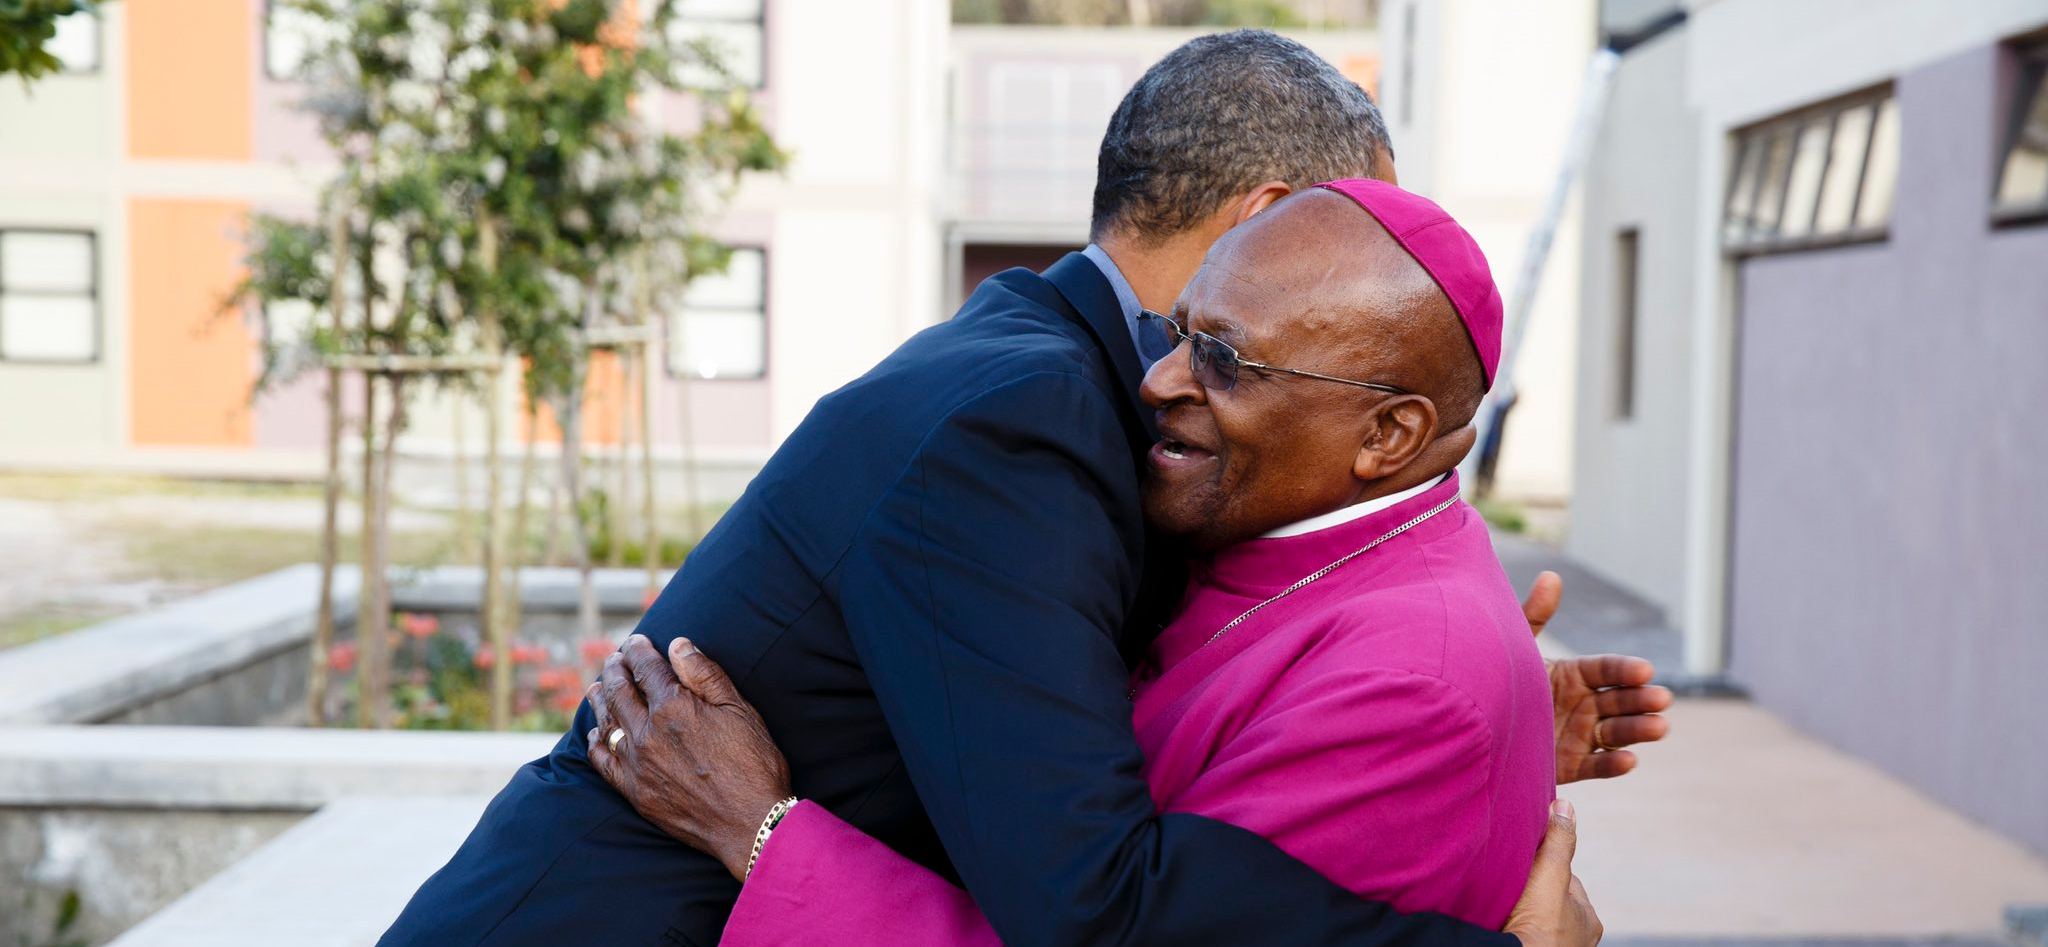 World Leaders Remember Desmond Tutu, President Biden Missing From Condolences